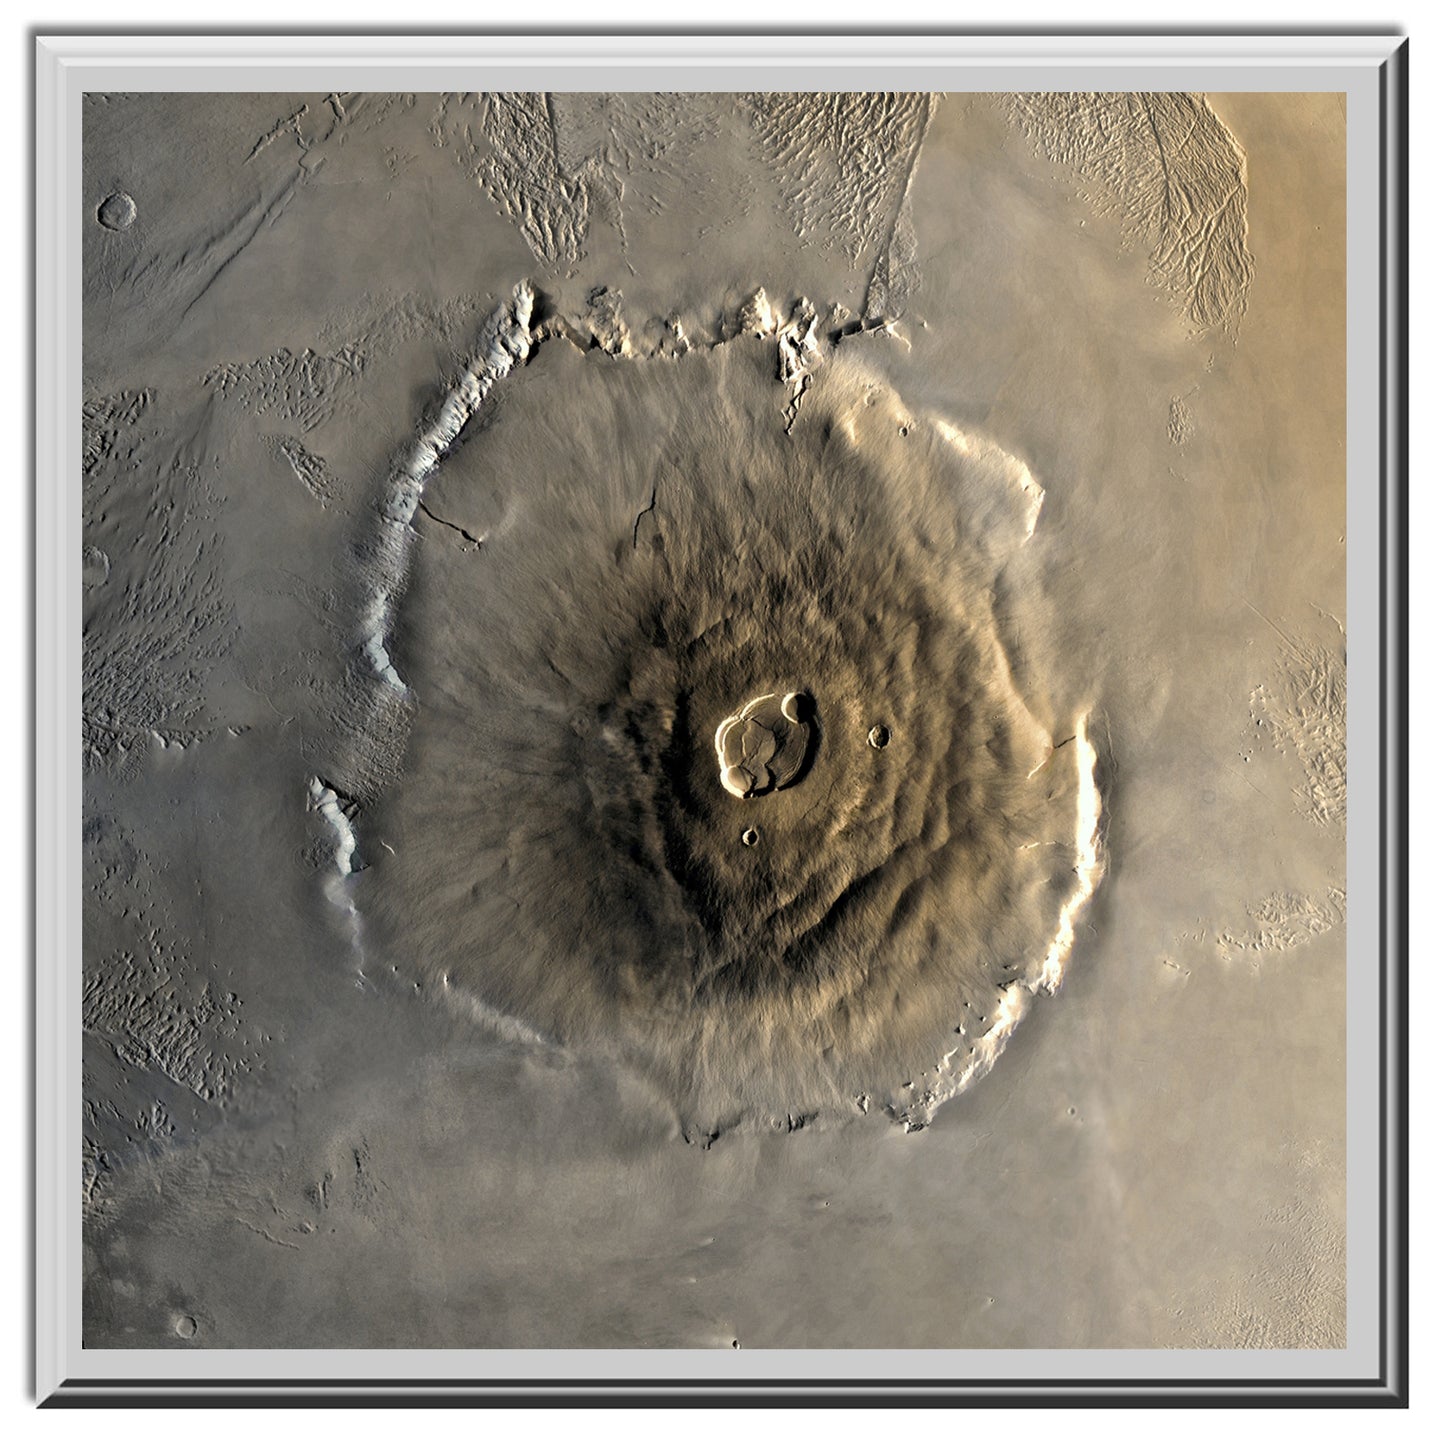 Viking orbiter image of Olympus Mons on Mars